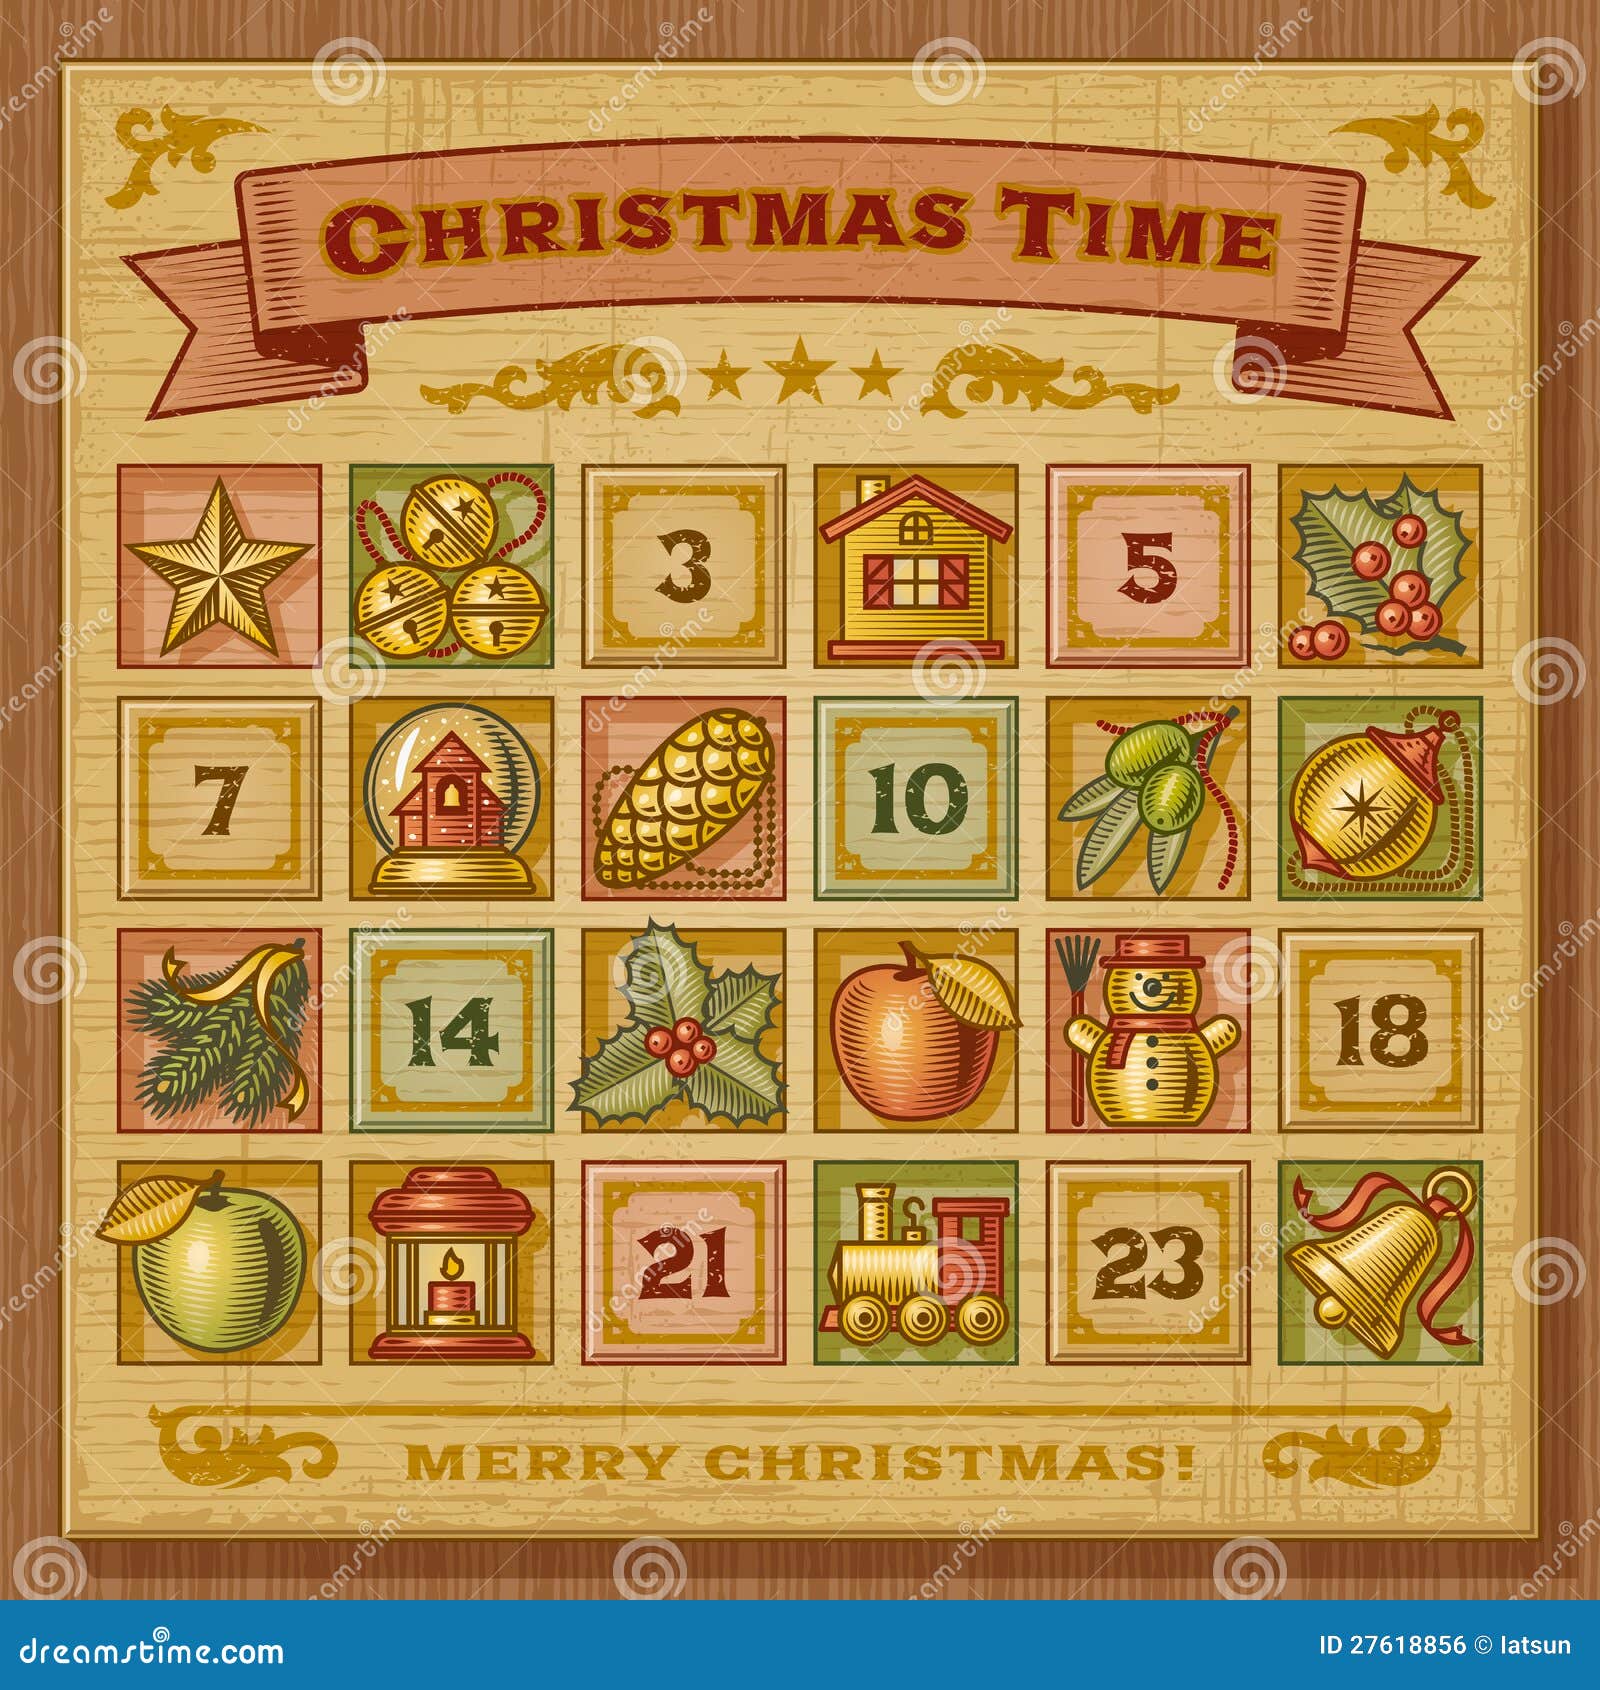 vintage-christmas-advent-calendar-27618856.jpg